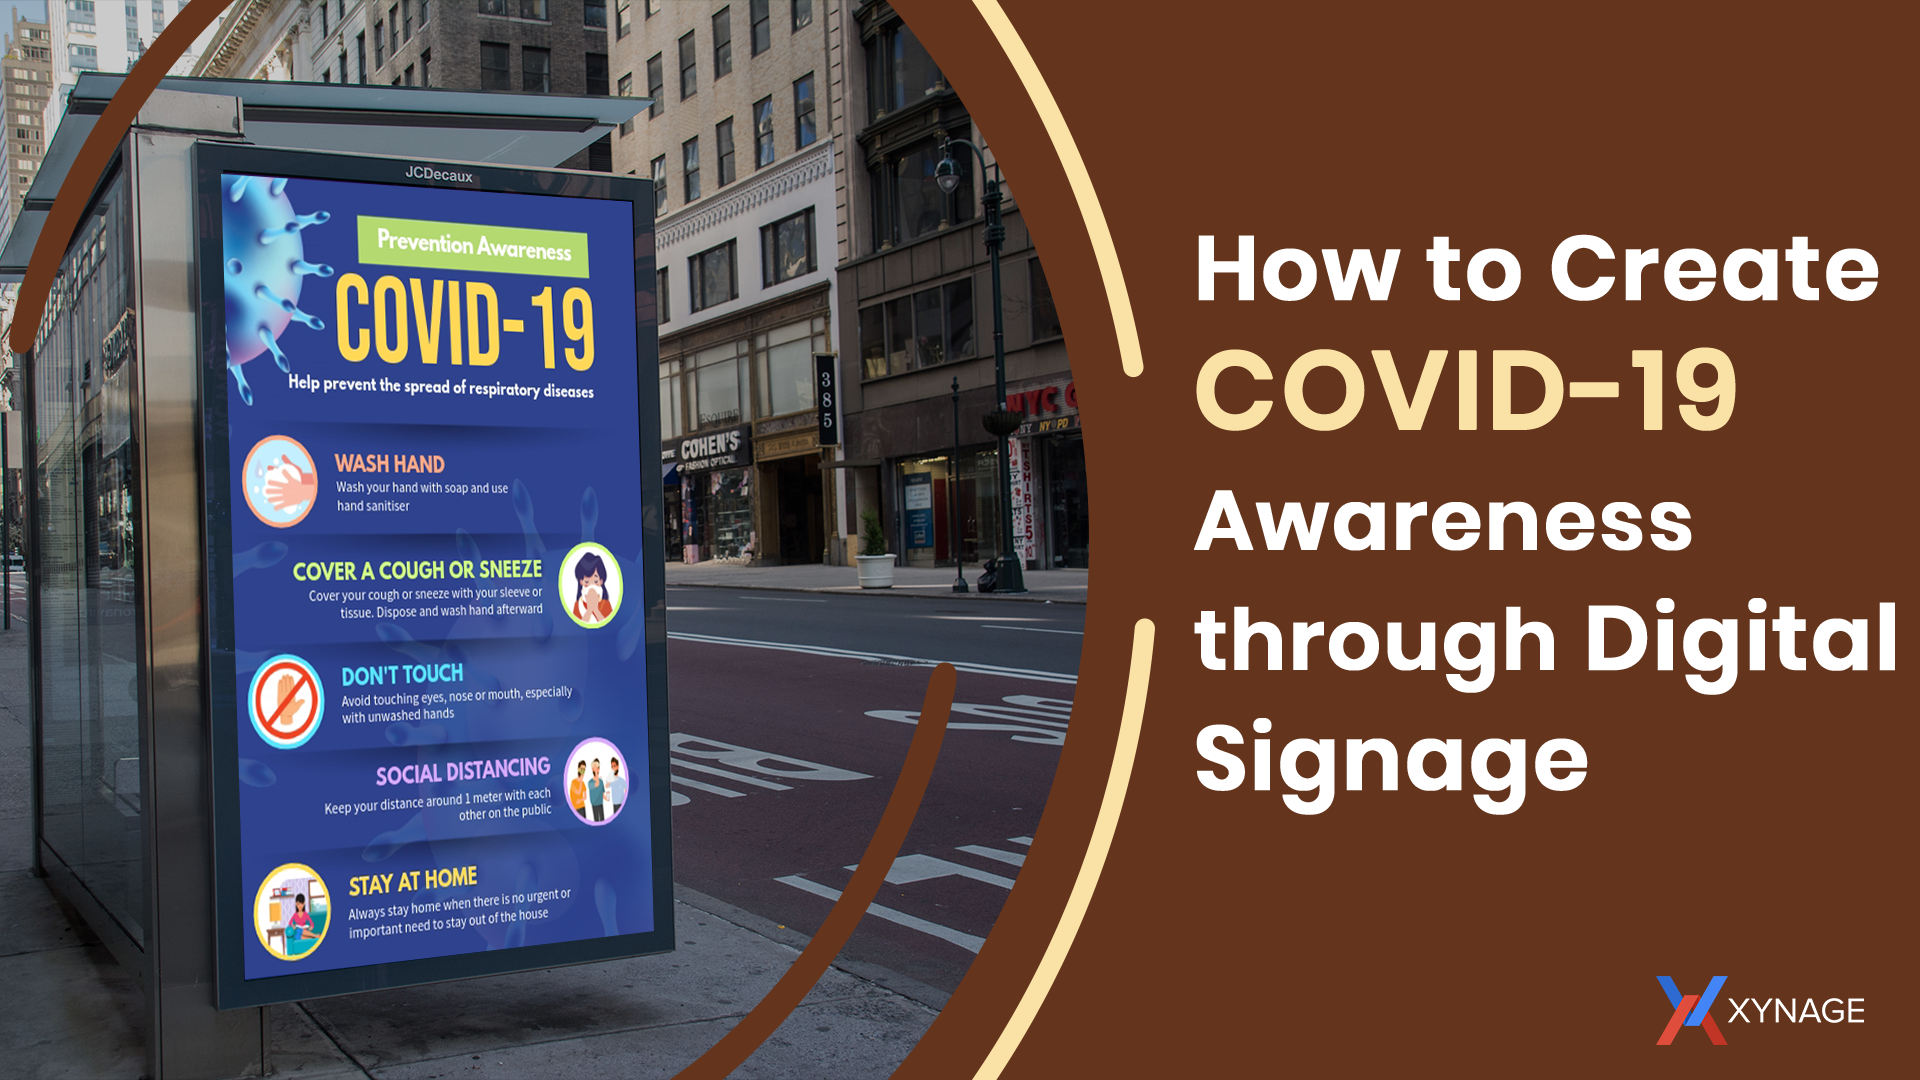 How to Create COVID-19 Awareness through Digital Signage?